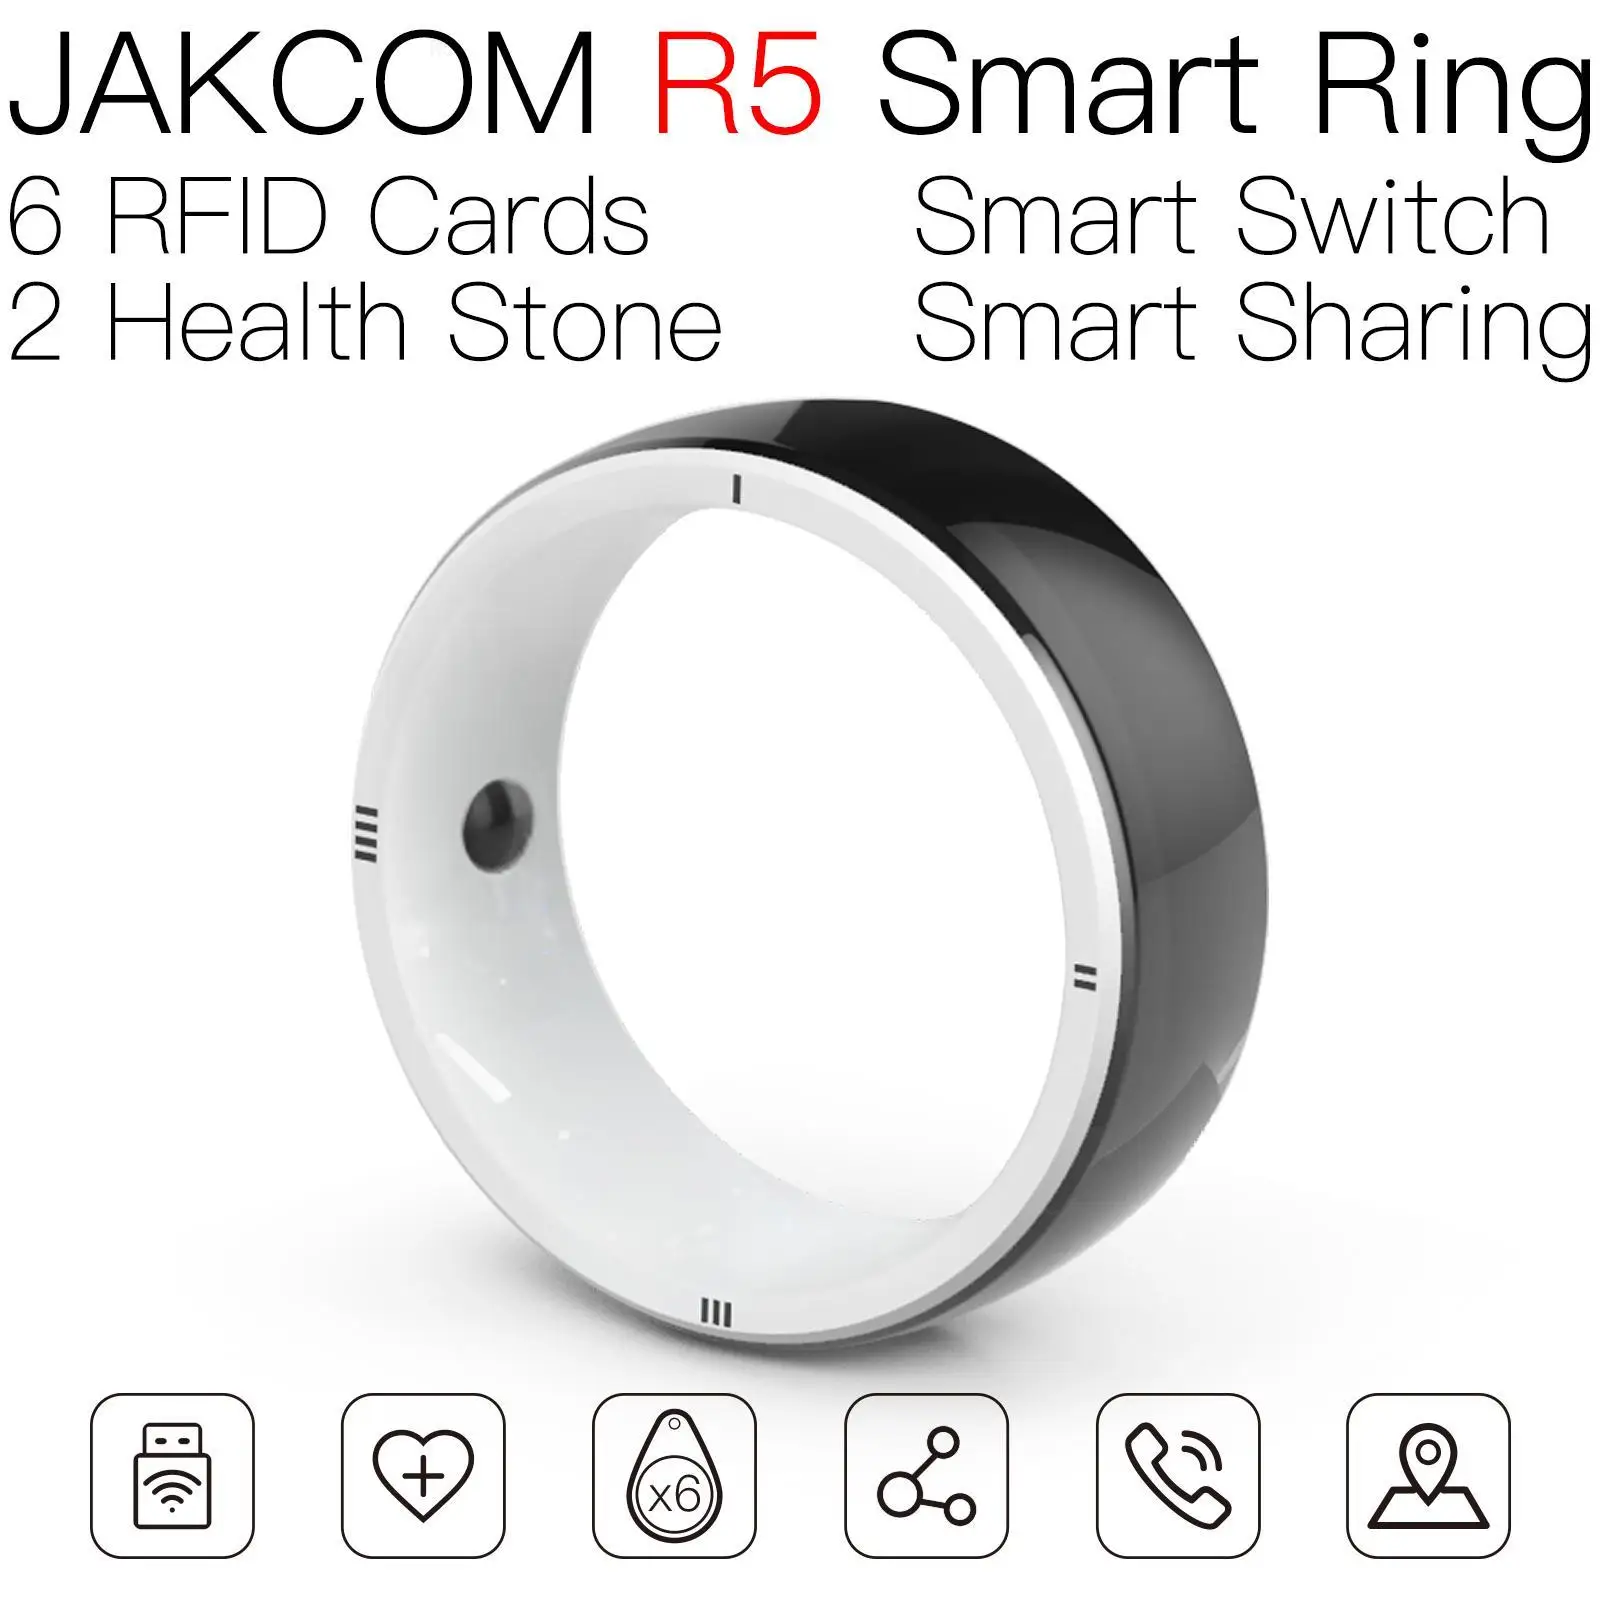 

JAKCOM R5 Smart Ring Newer than tags 125khz m3u iptv anti rfid card uhf tag chip 13 56 mhz smartphone nfc micro mini iso15693